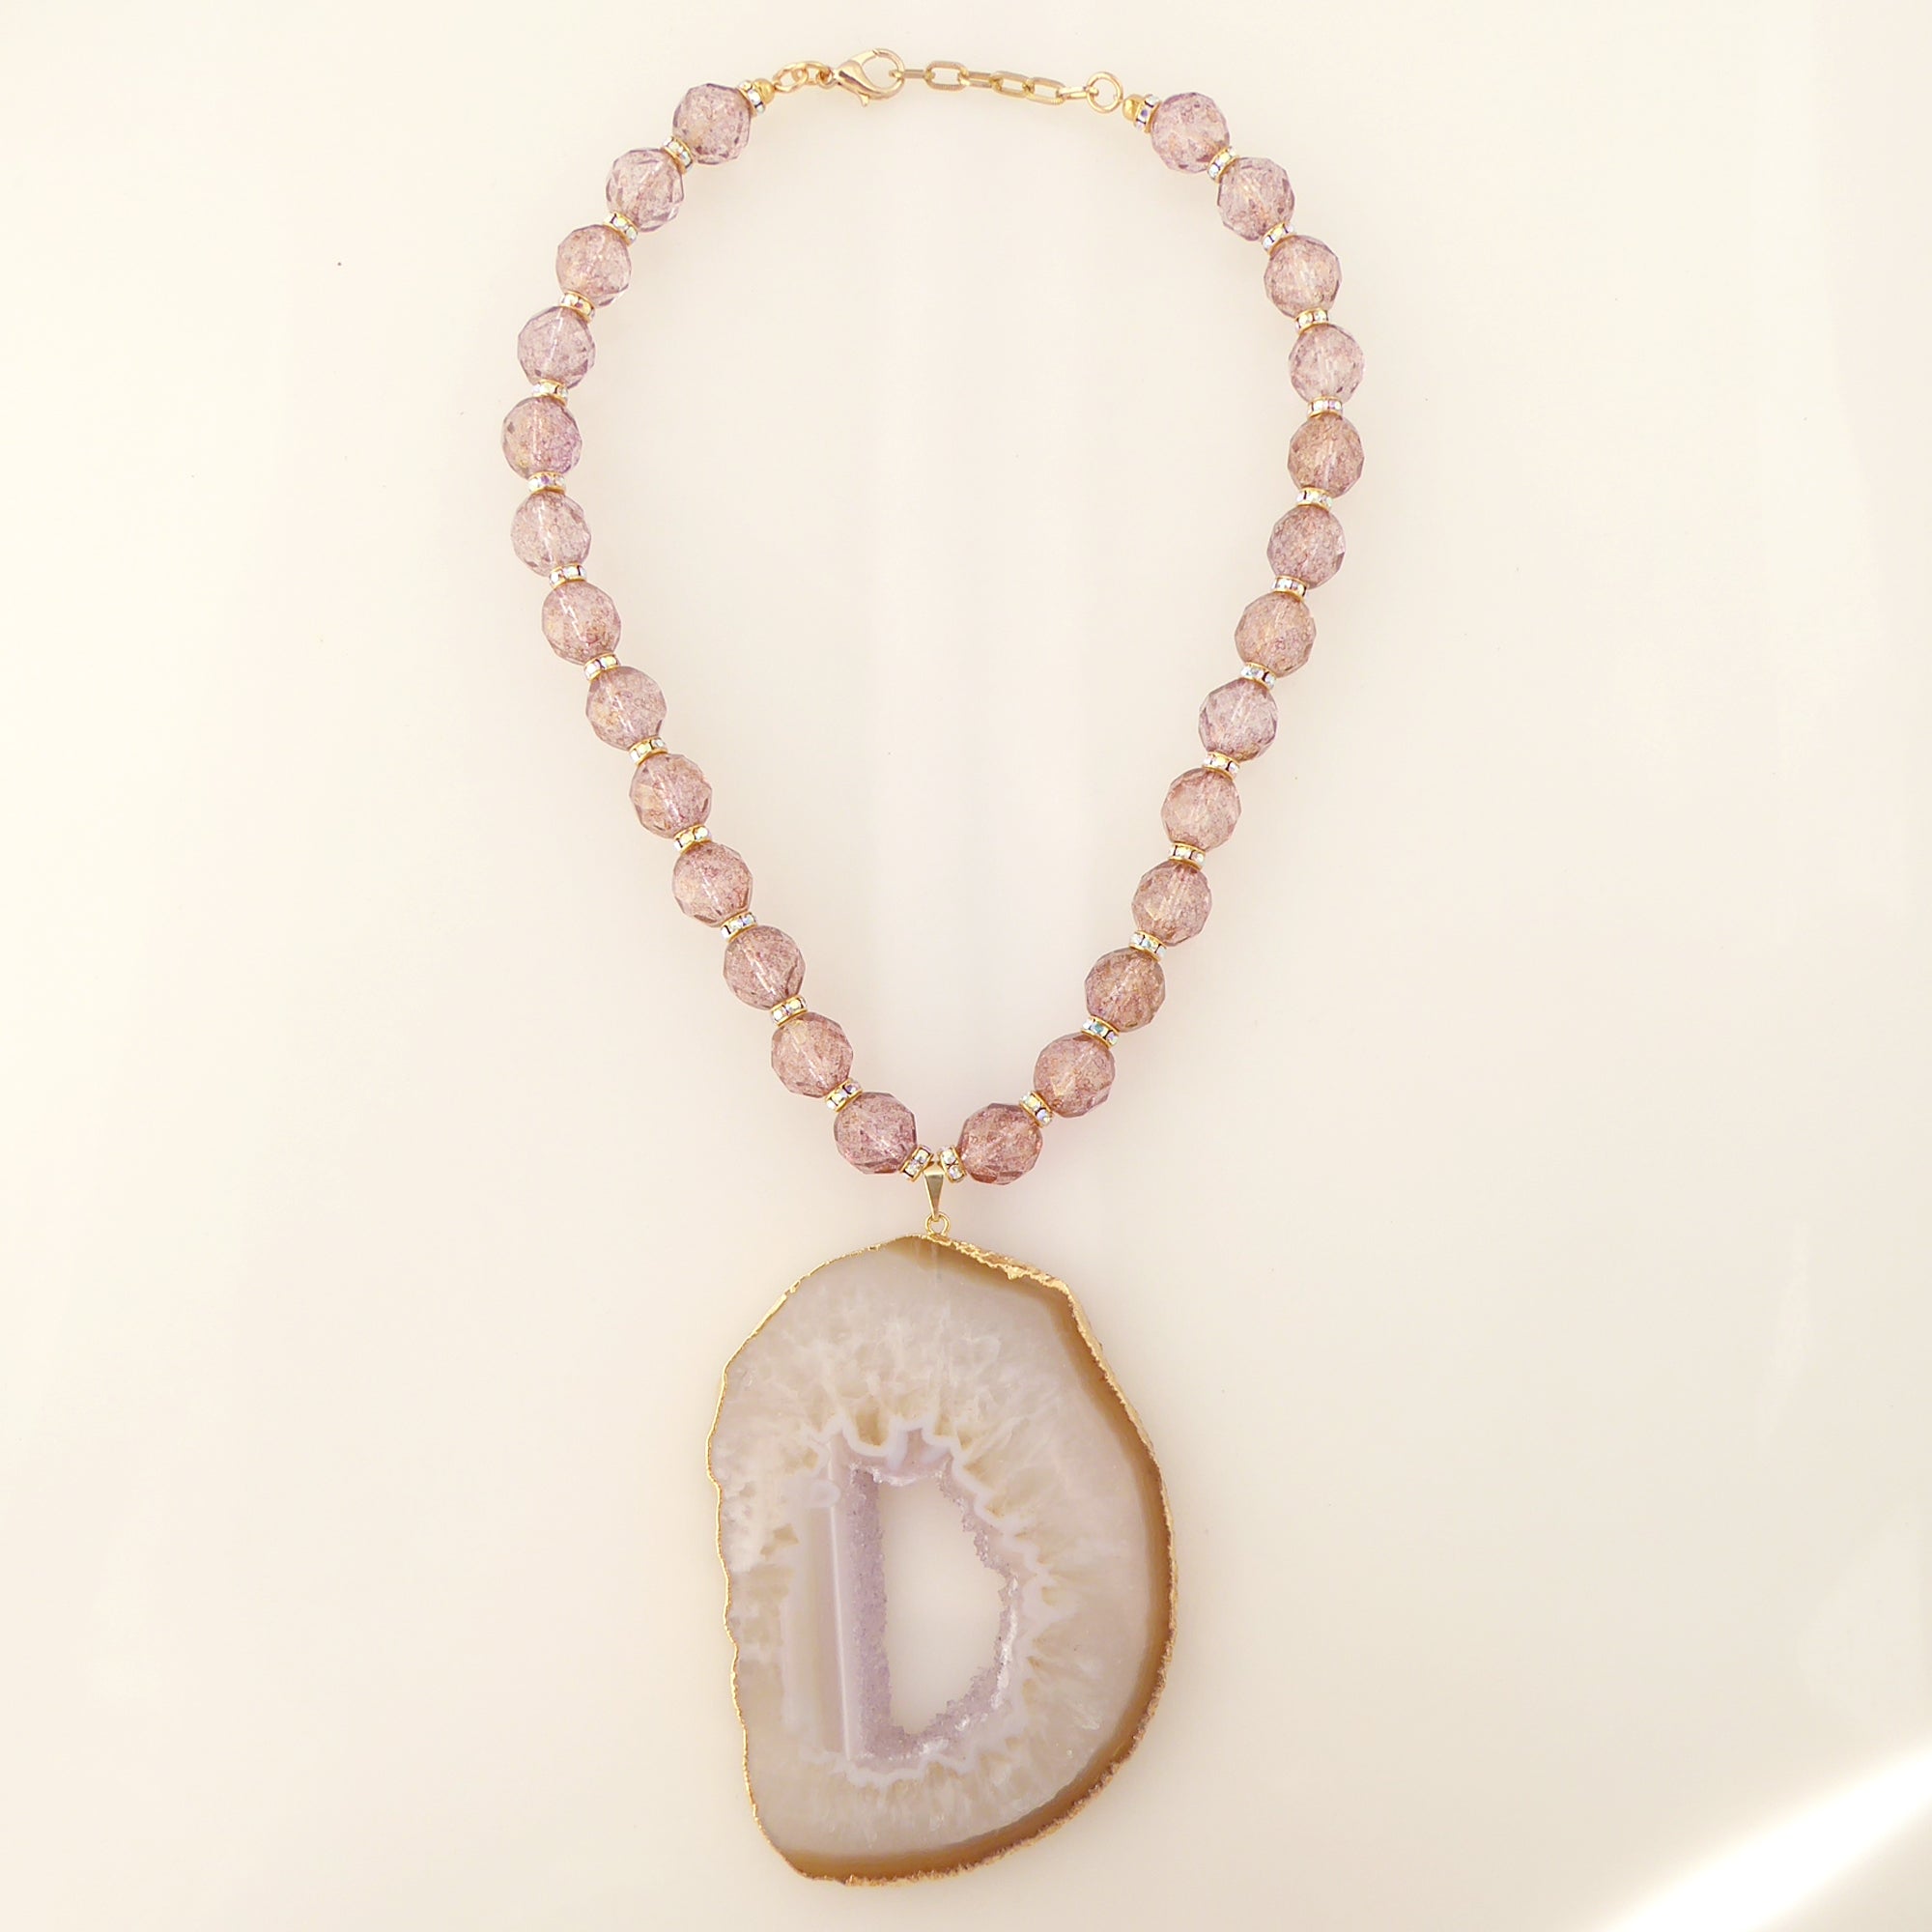 Lavender druzy agate necklace by Jenny Dayco 5